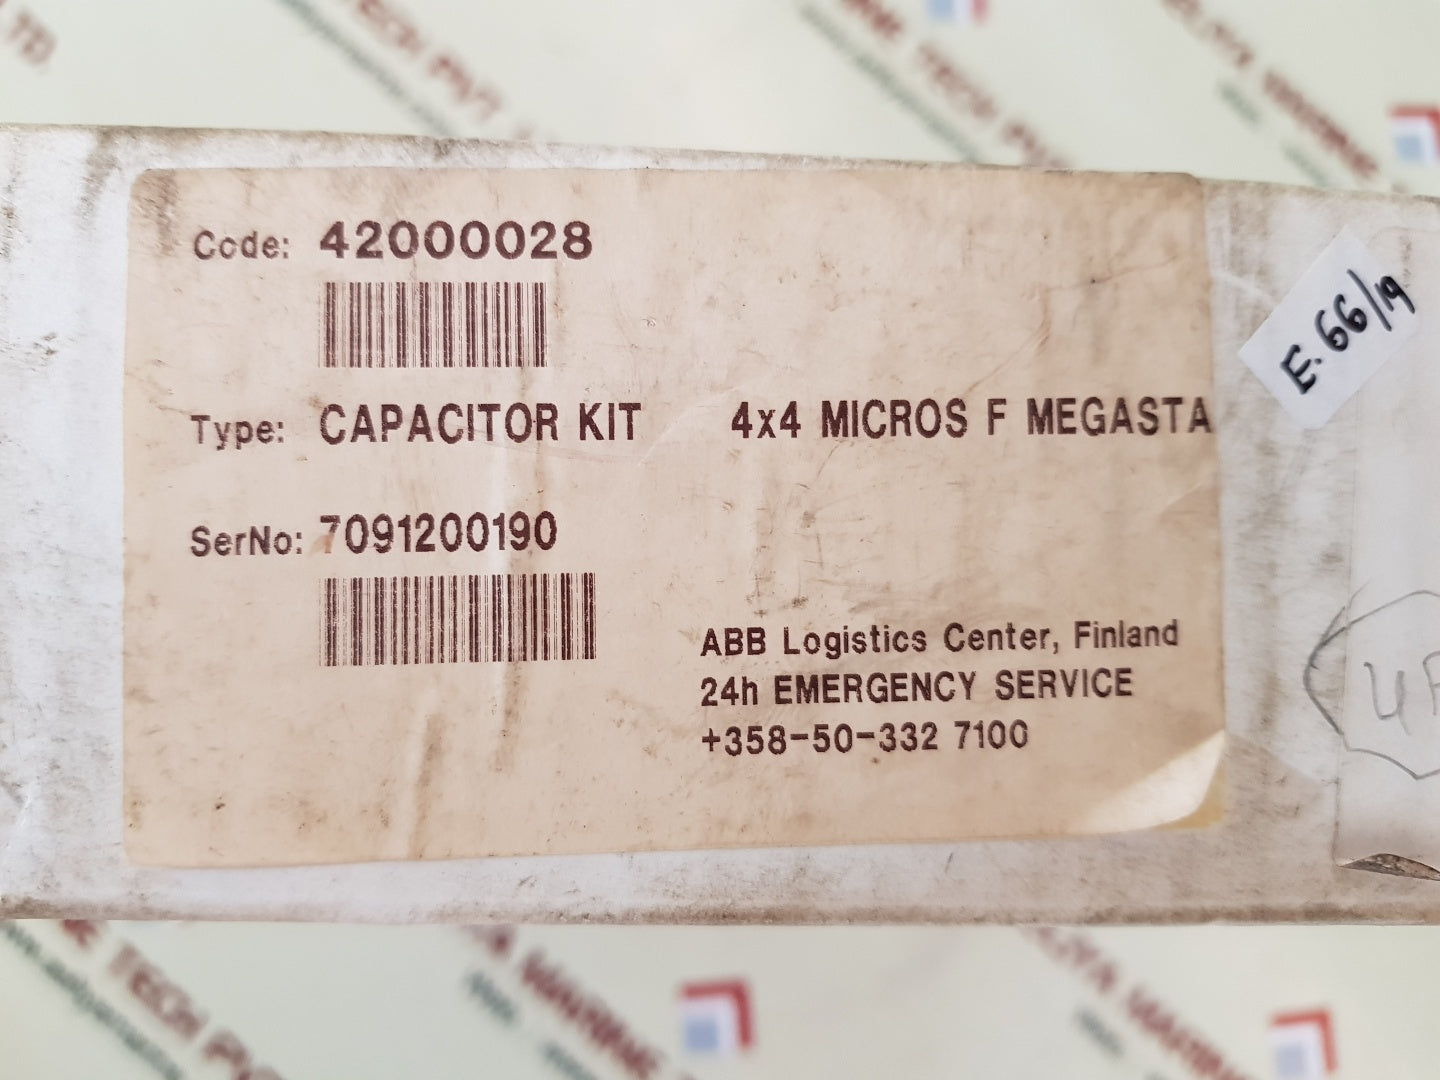 Tpc fpx86x0405j capacitor kit